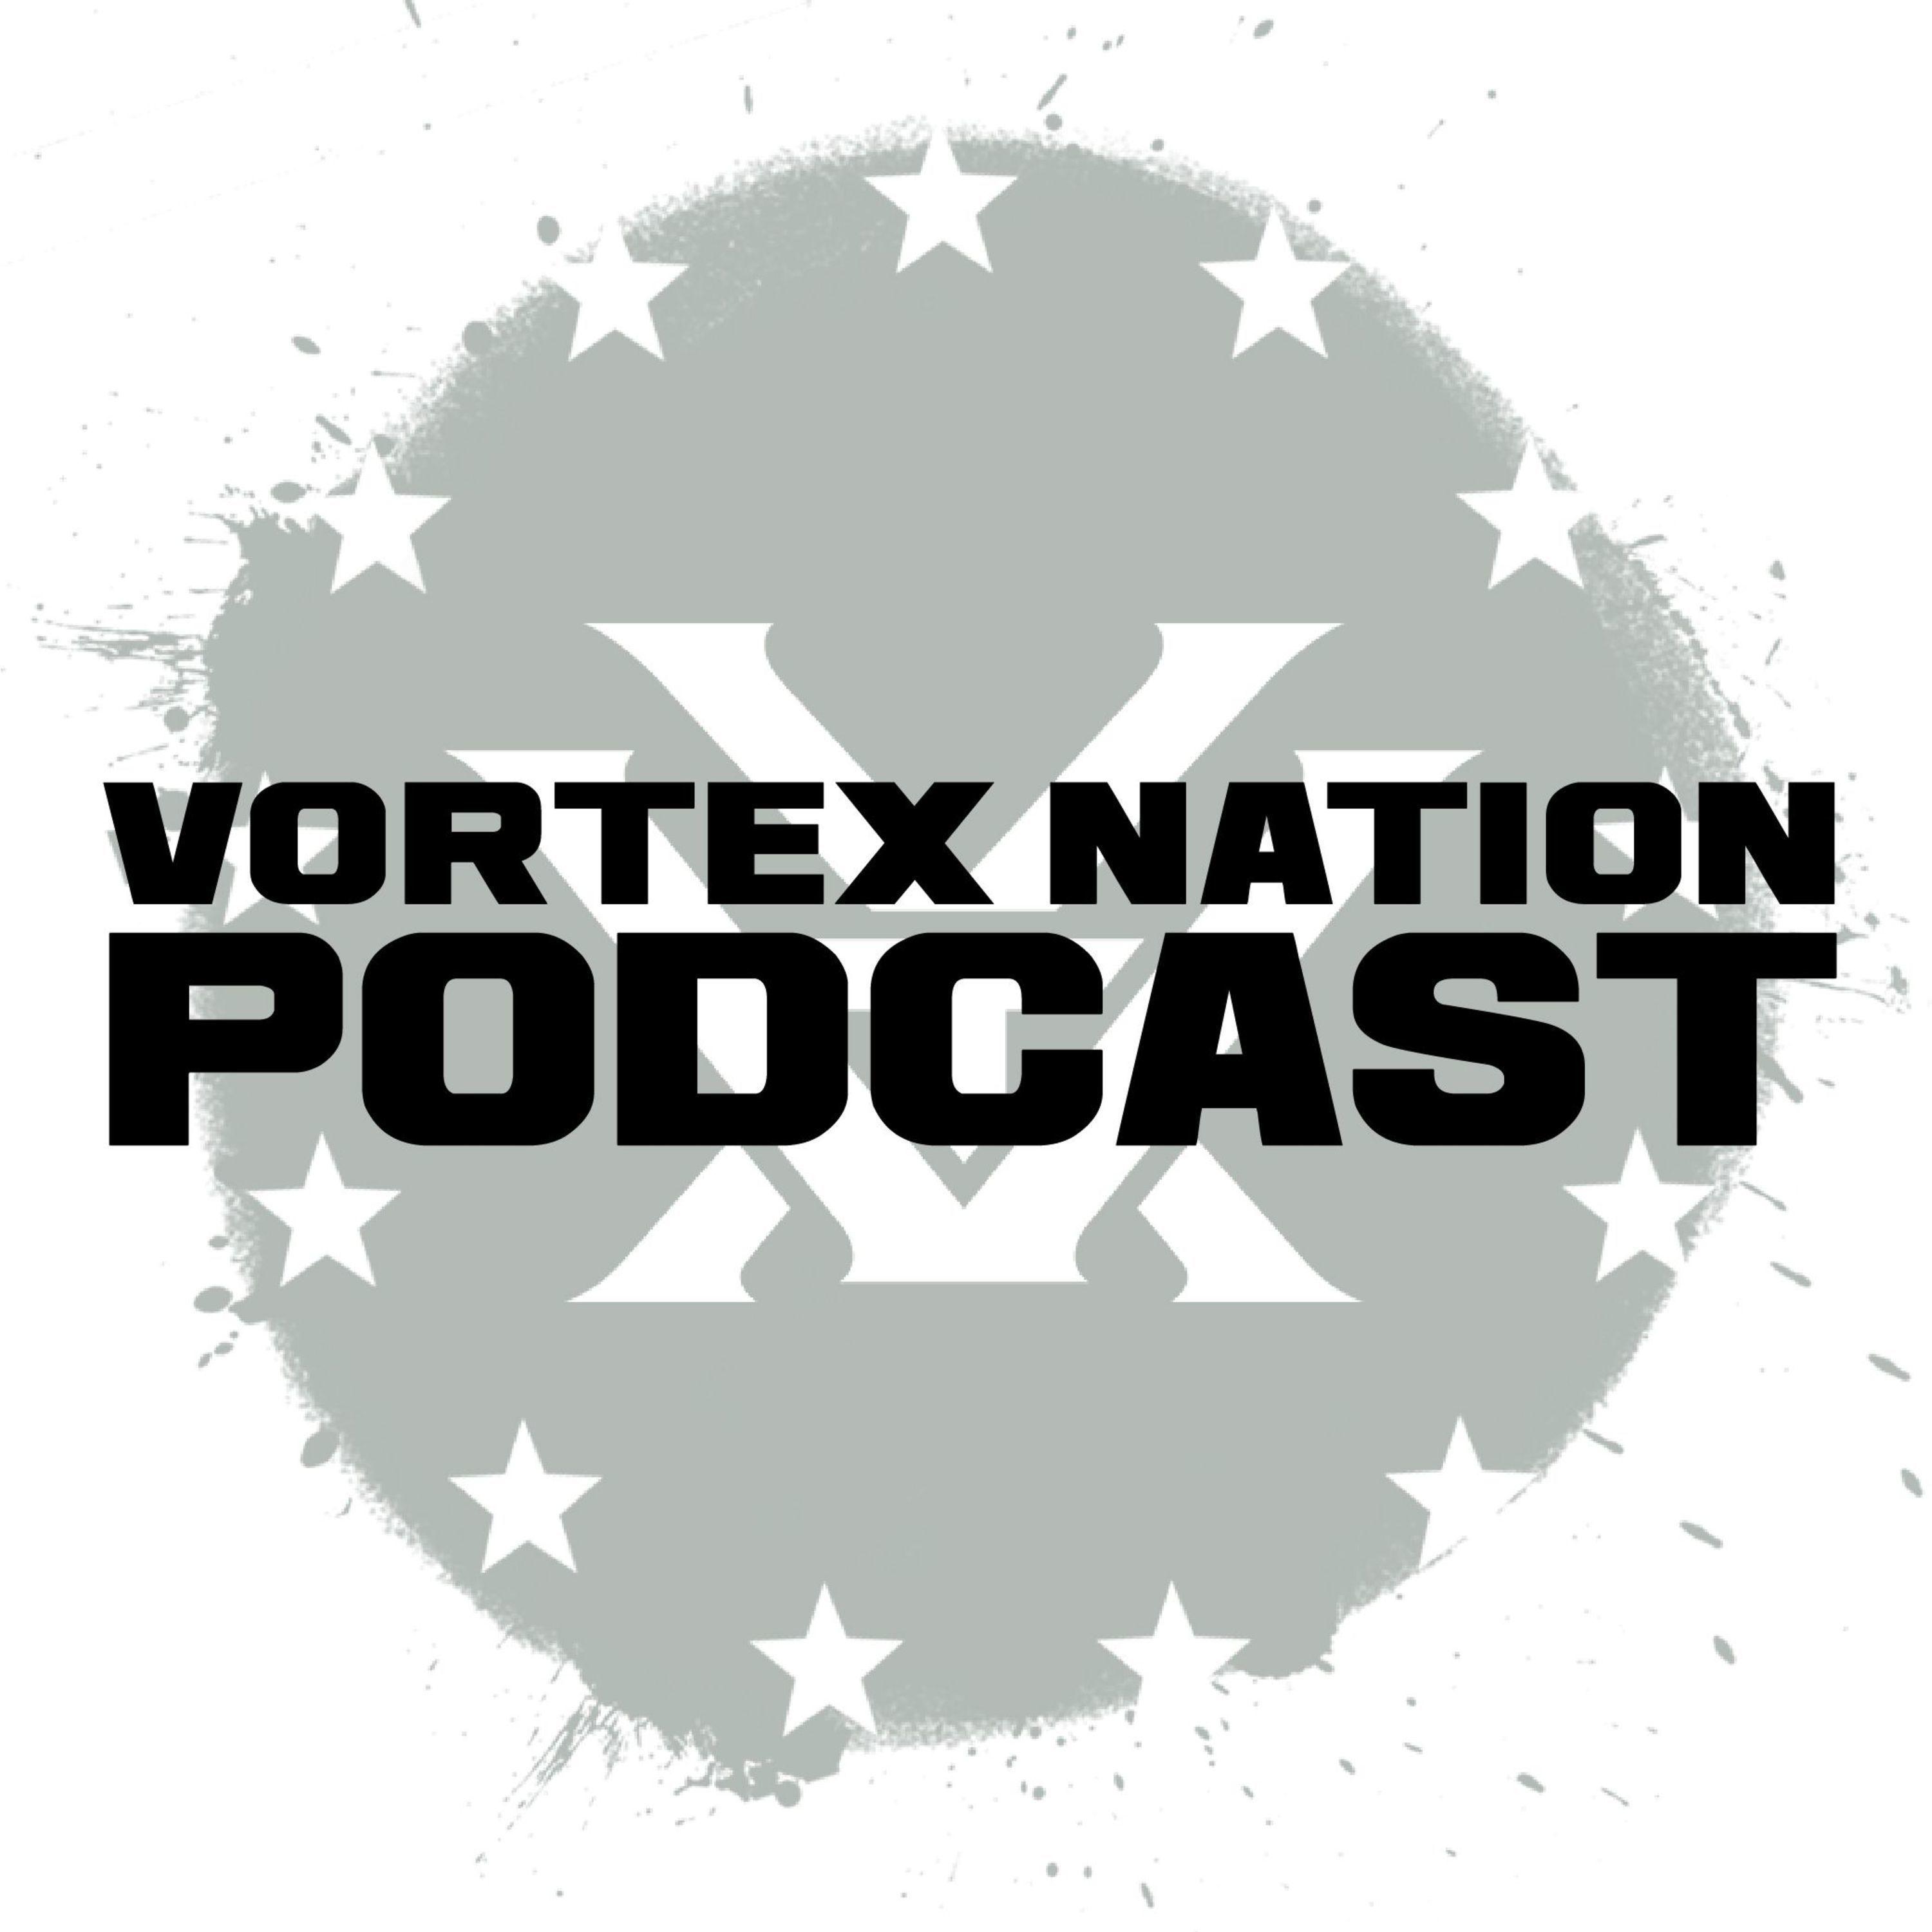 Vortex Optics Logo - Vortex Nation Podcast by Vortex Optics on Apple Podcasts